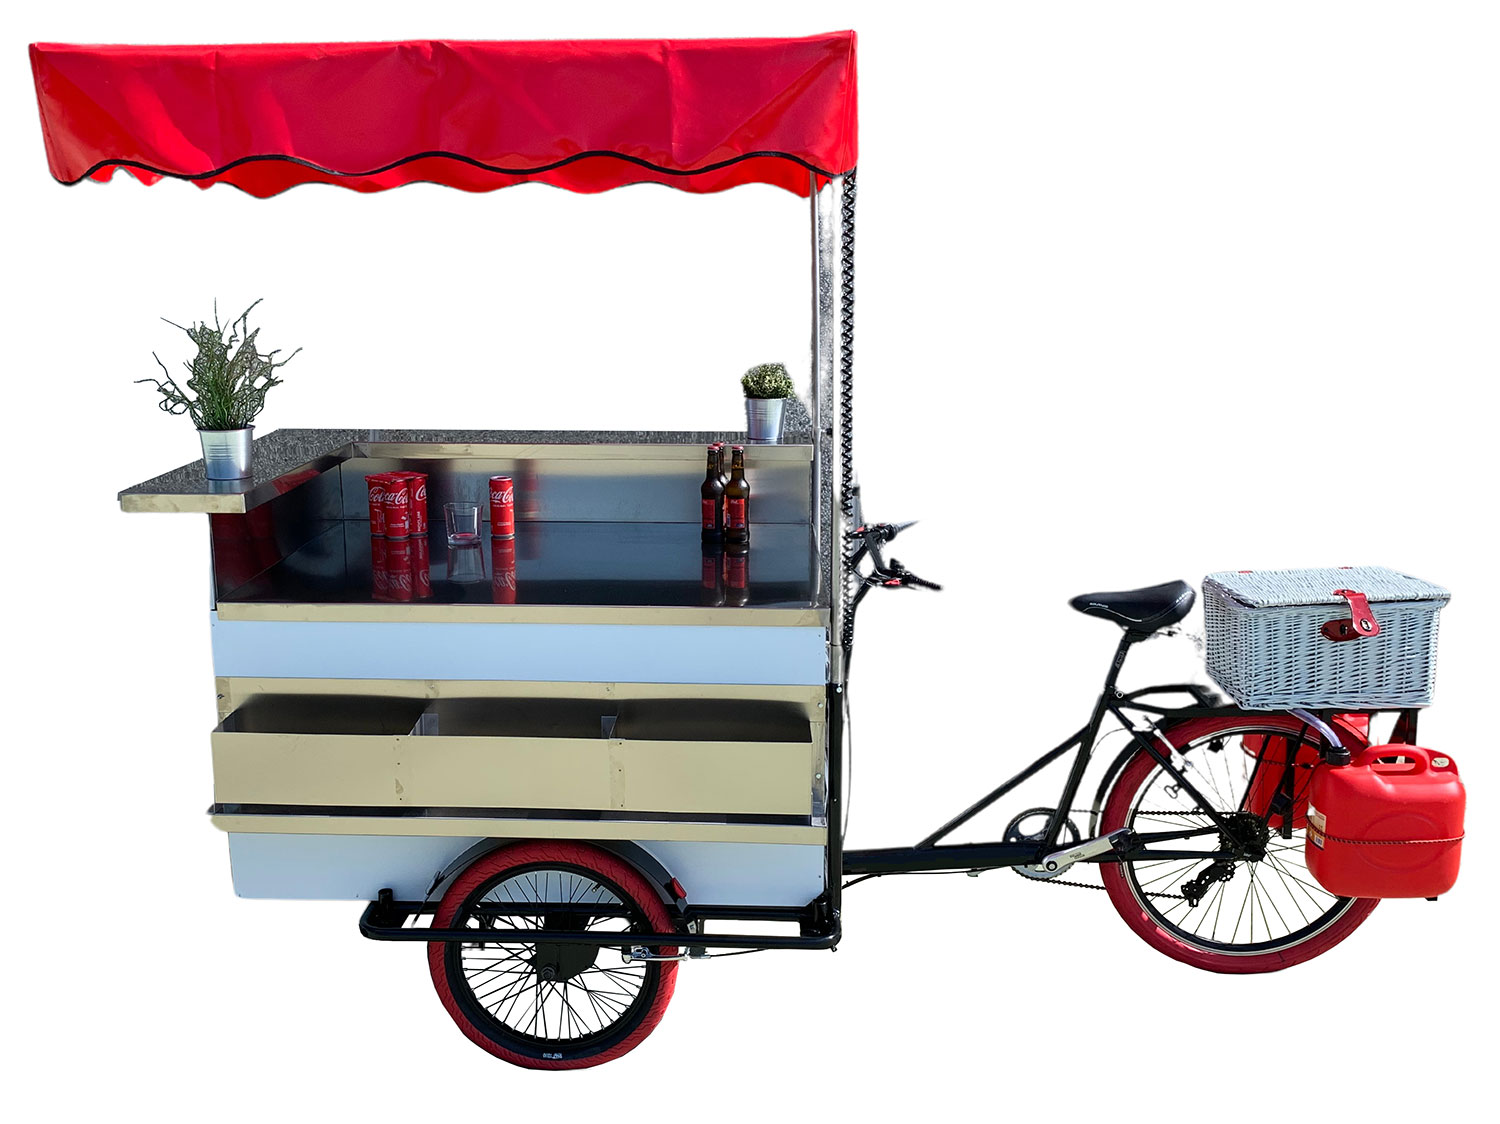 Cargo bike street food generica